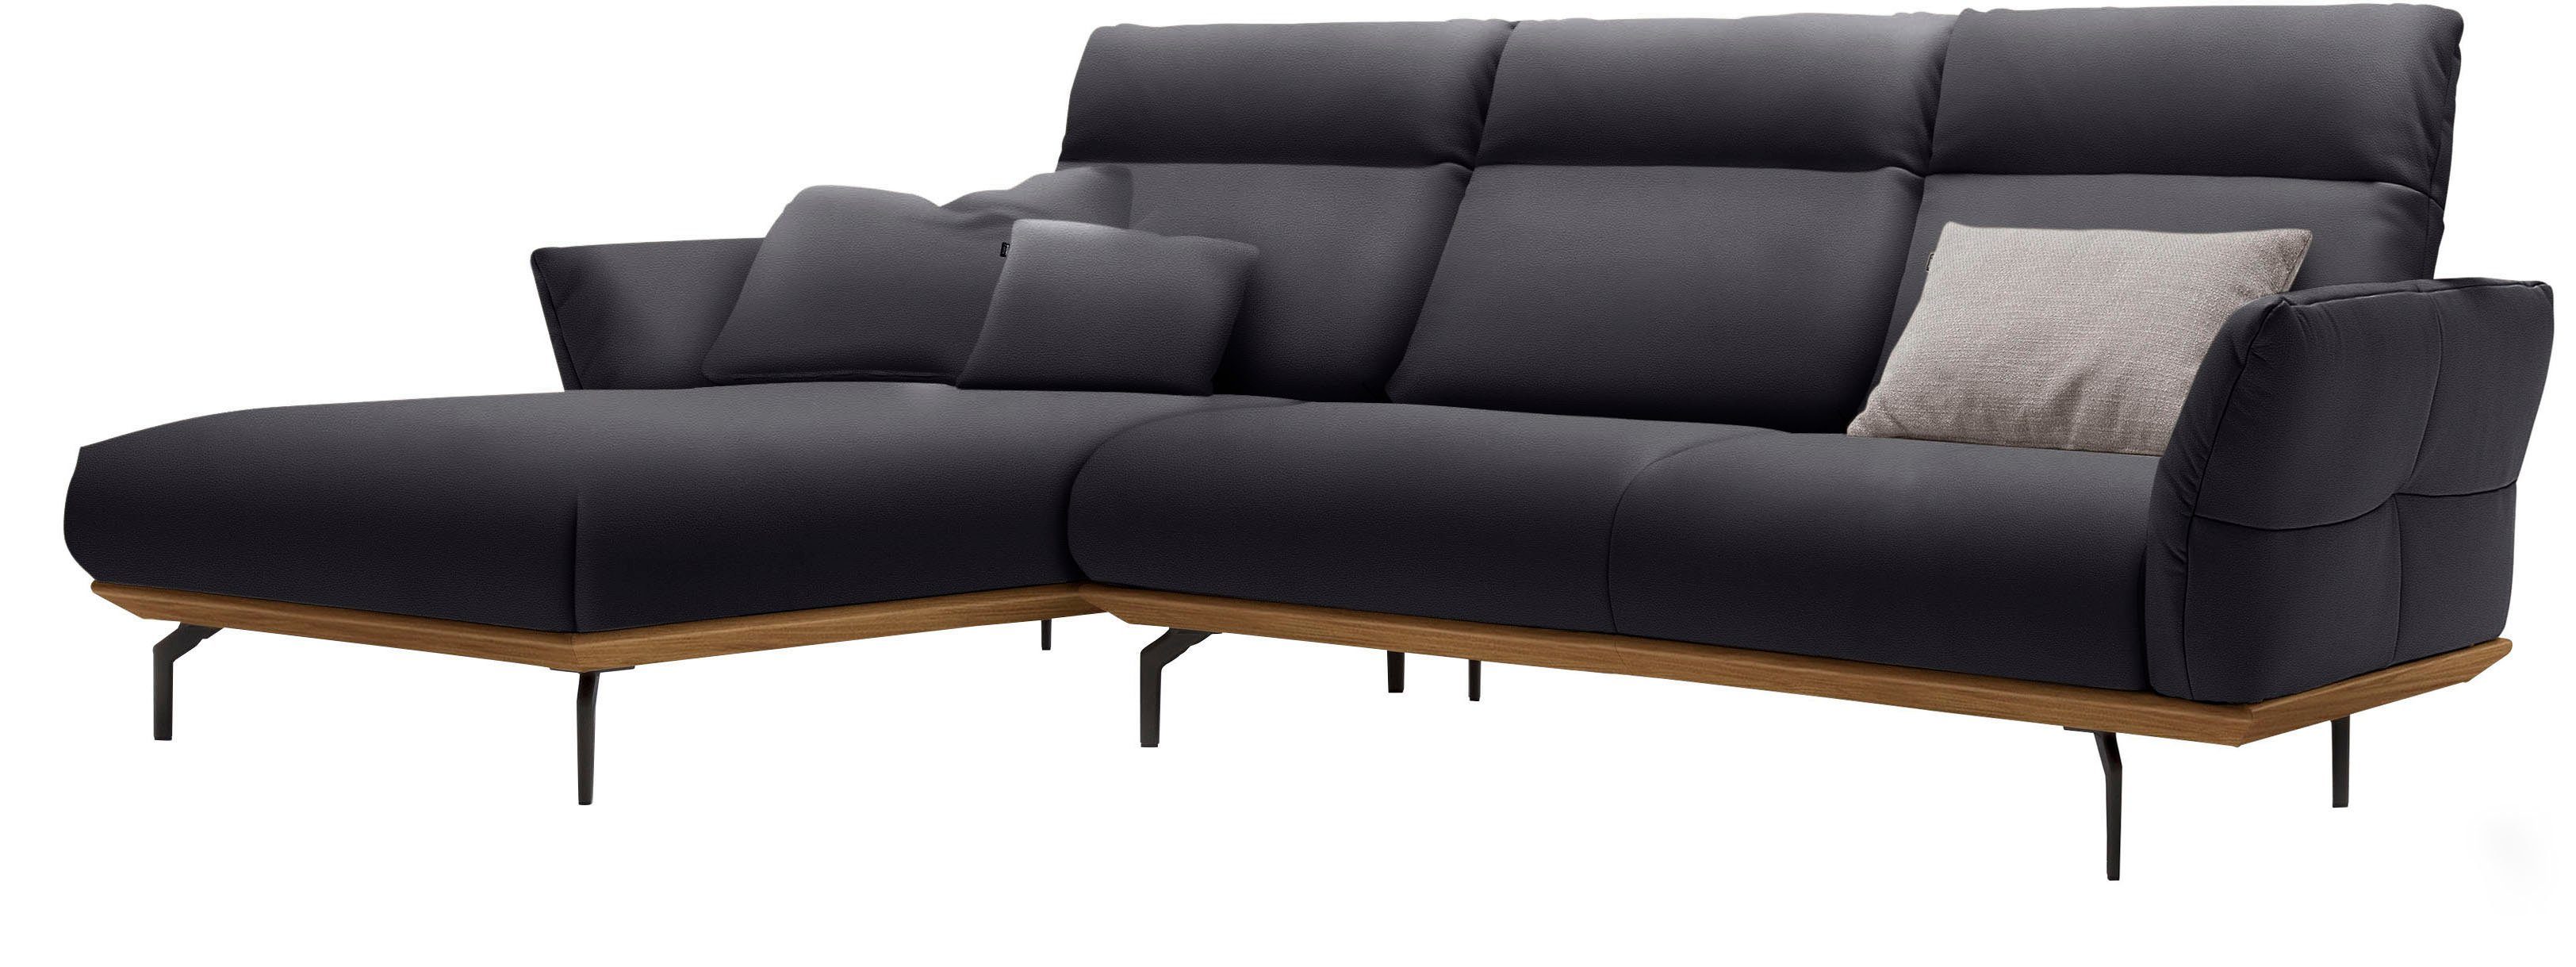 Ecksofa hülsta Breite sofa Umbragrau, Winkelfüße Sockel in Nussbaum, 298 cm hs.460, in